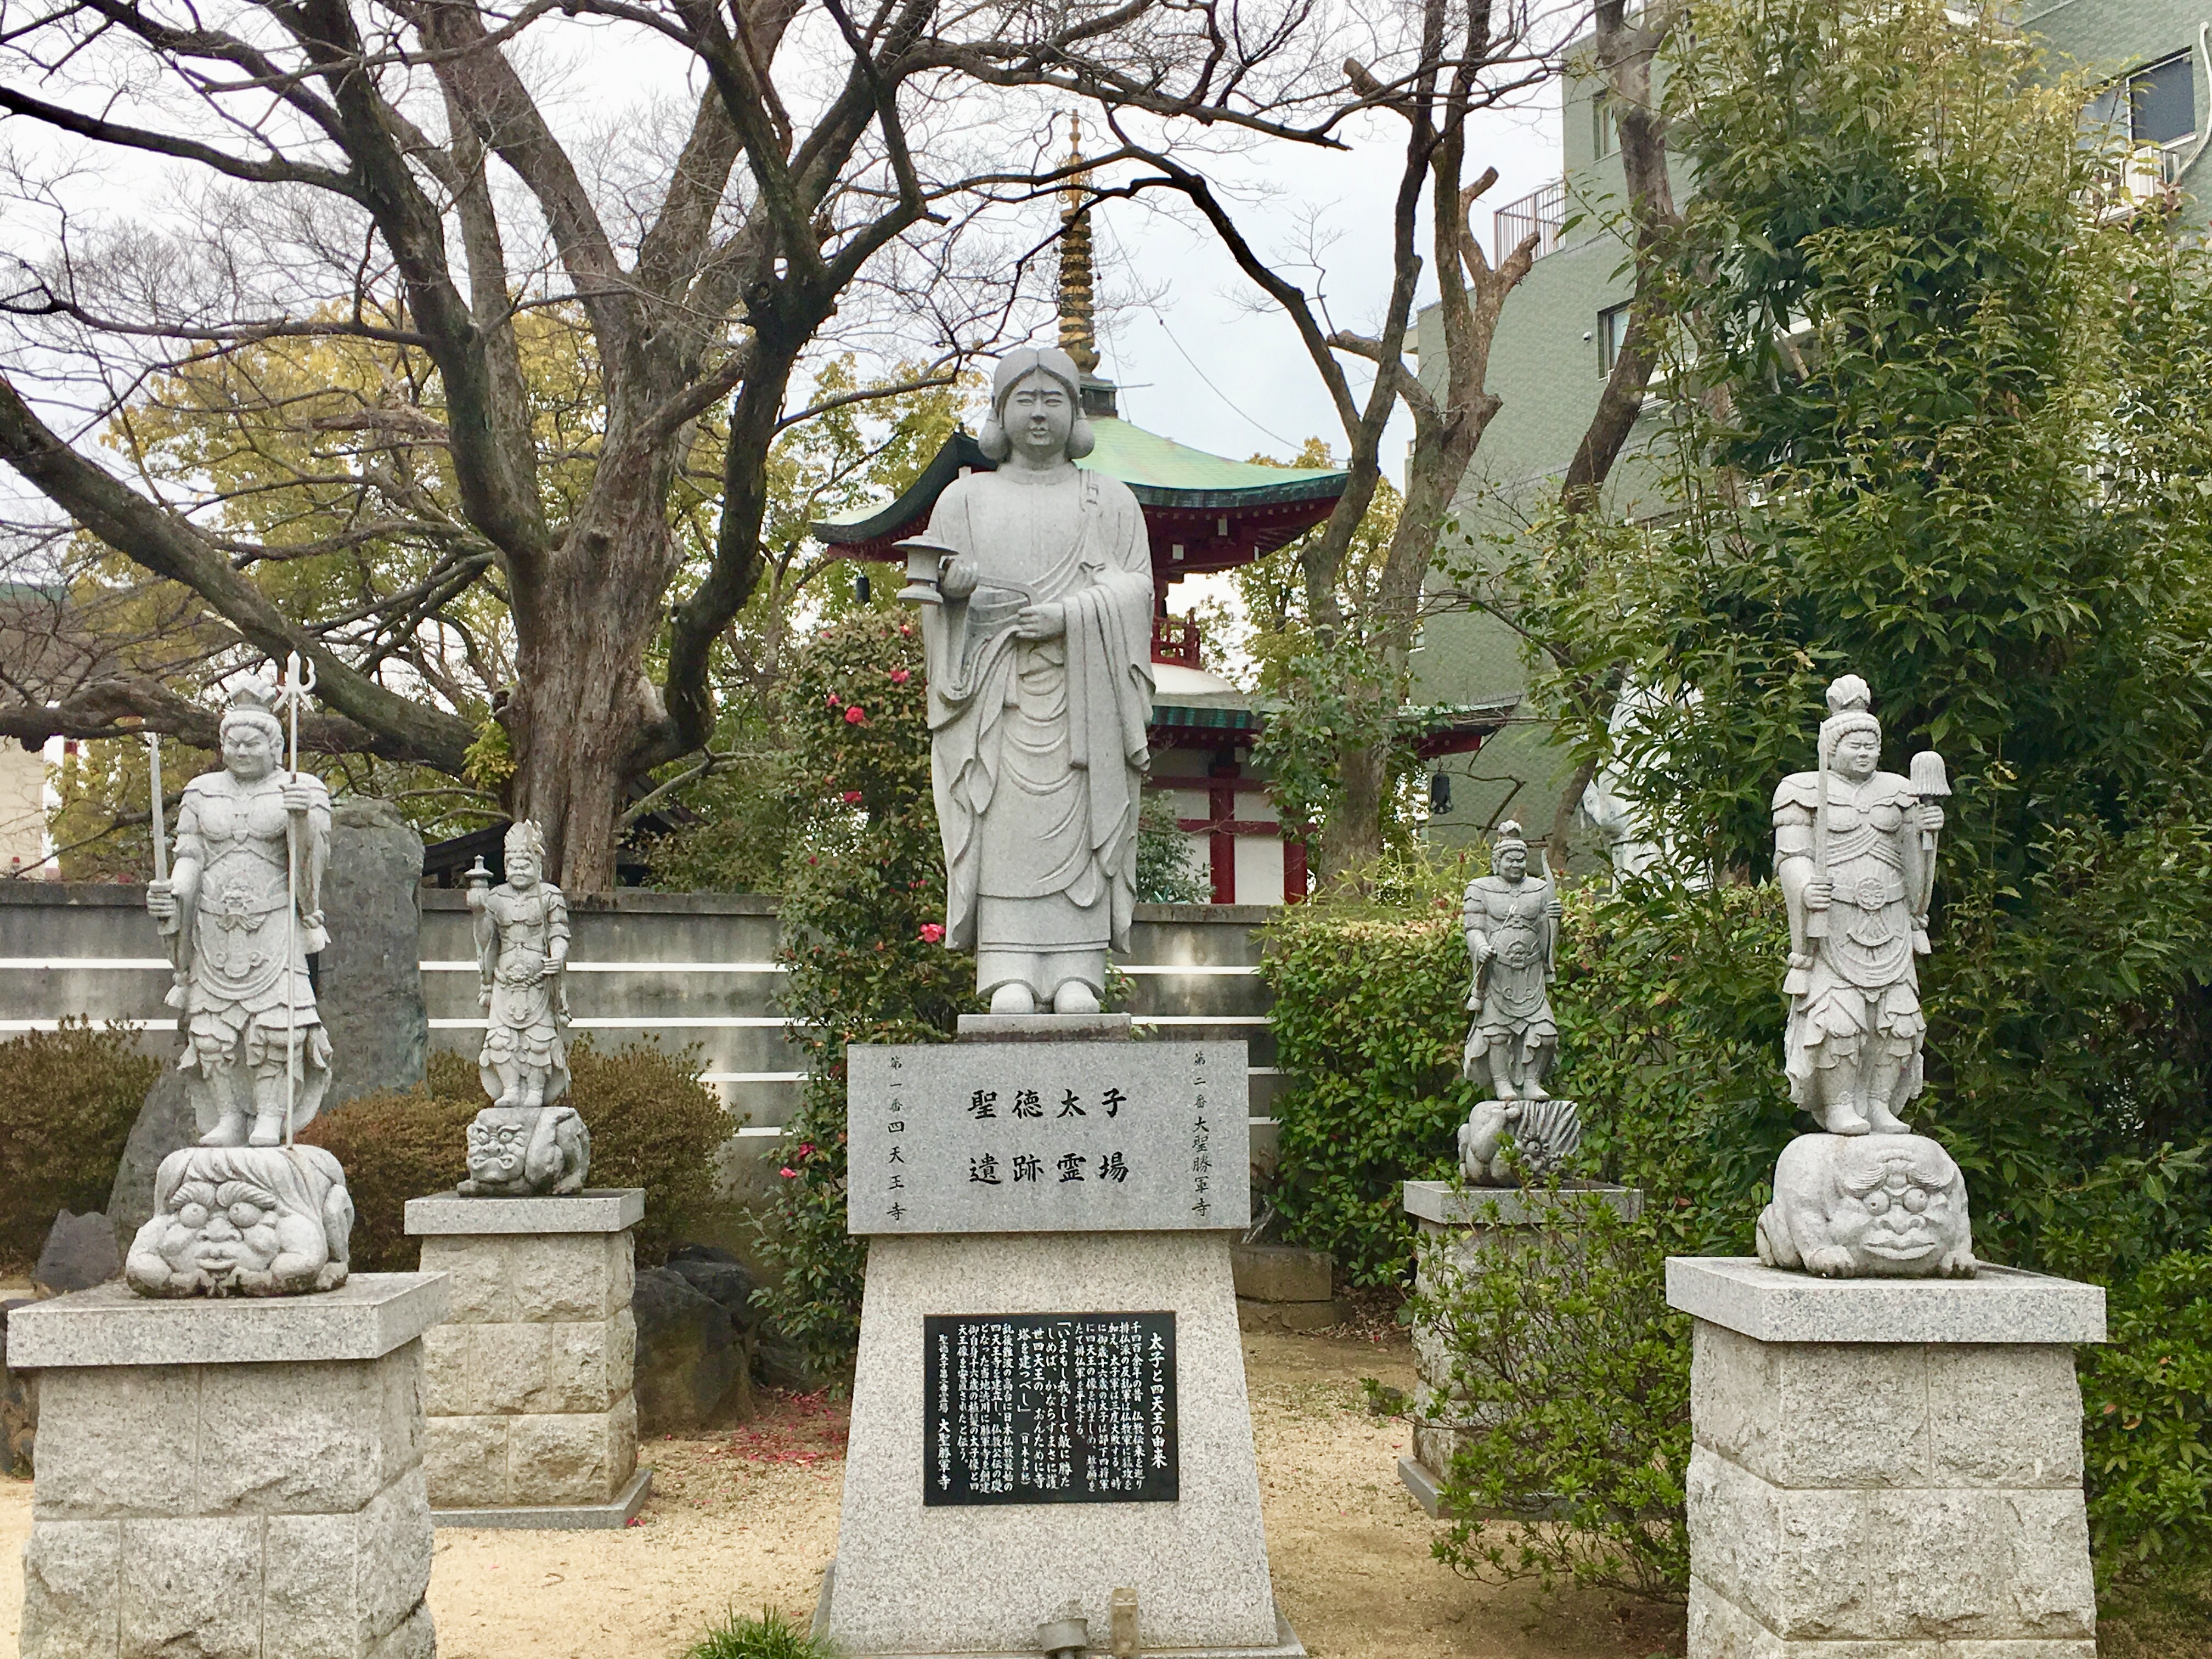 stone statue of prince Shotoku and the shiten-no gods with shotoku in the center